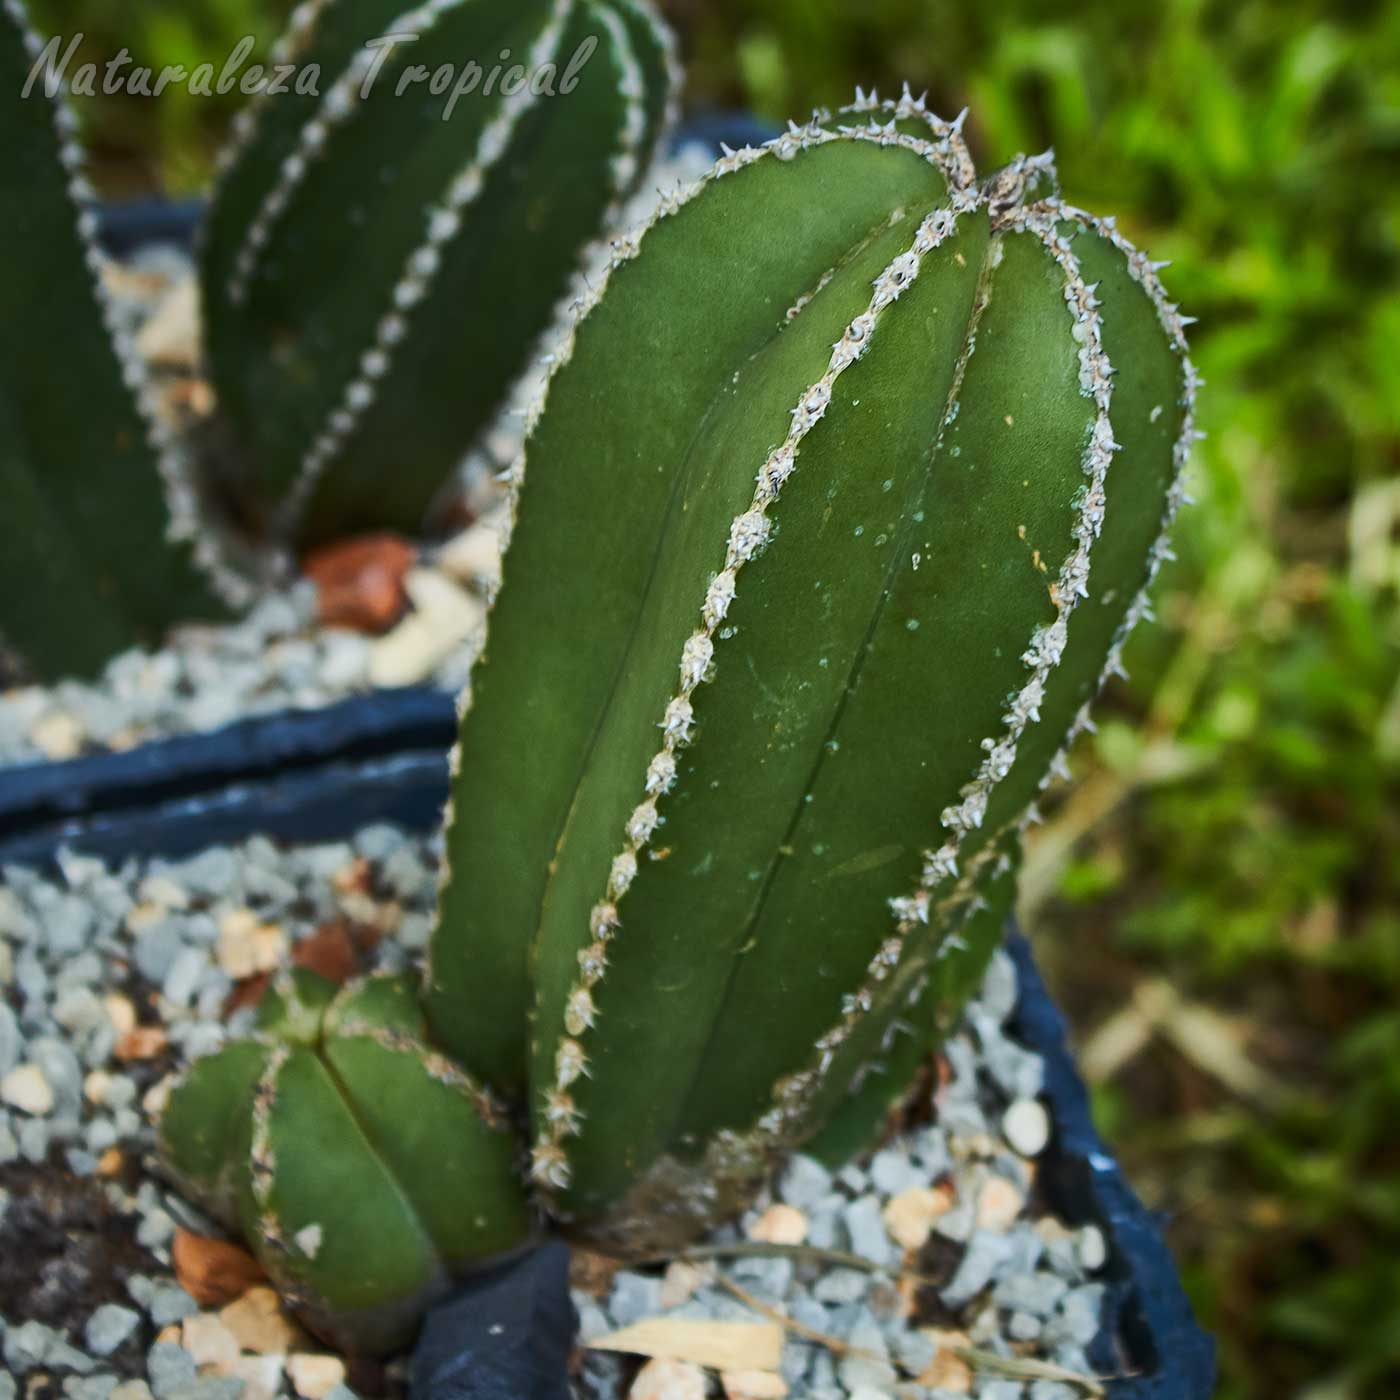 Vista de un ejemplar joven de un cactus del género Pachycereus